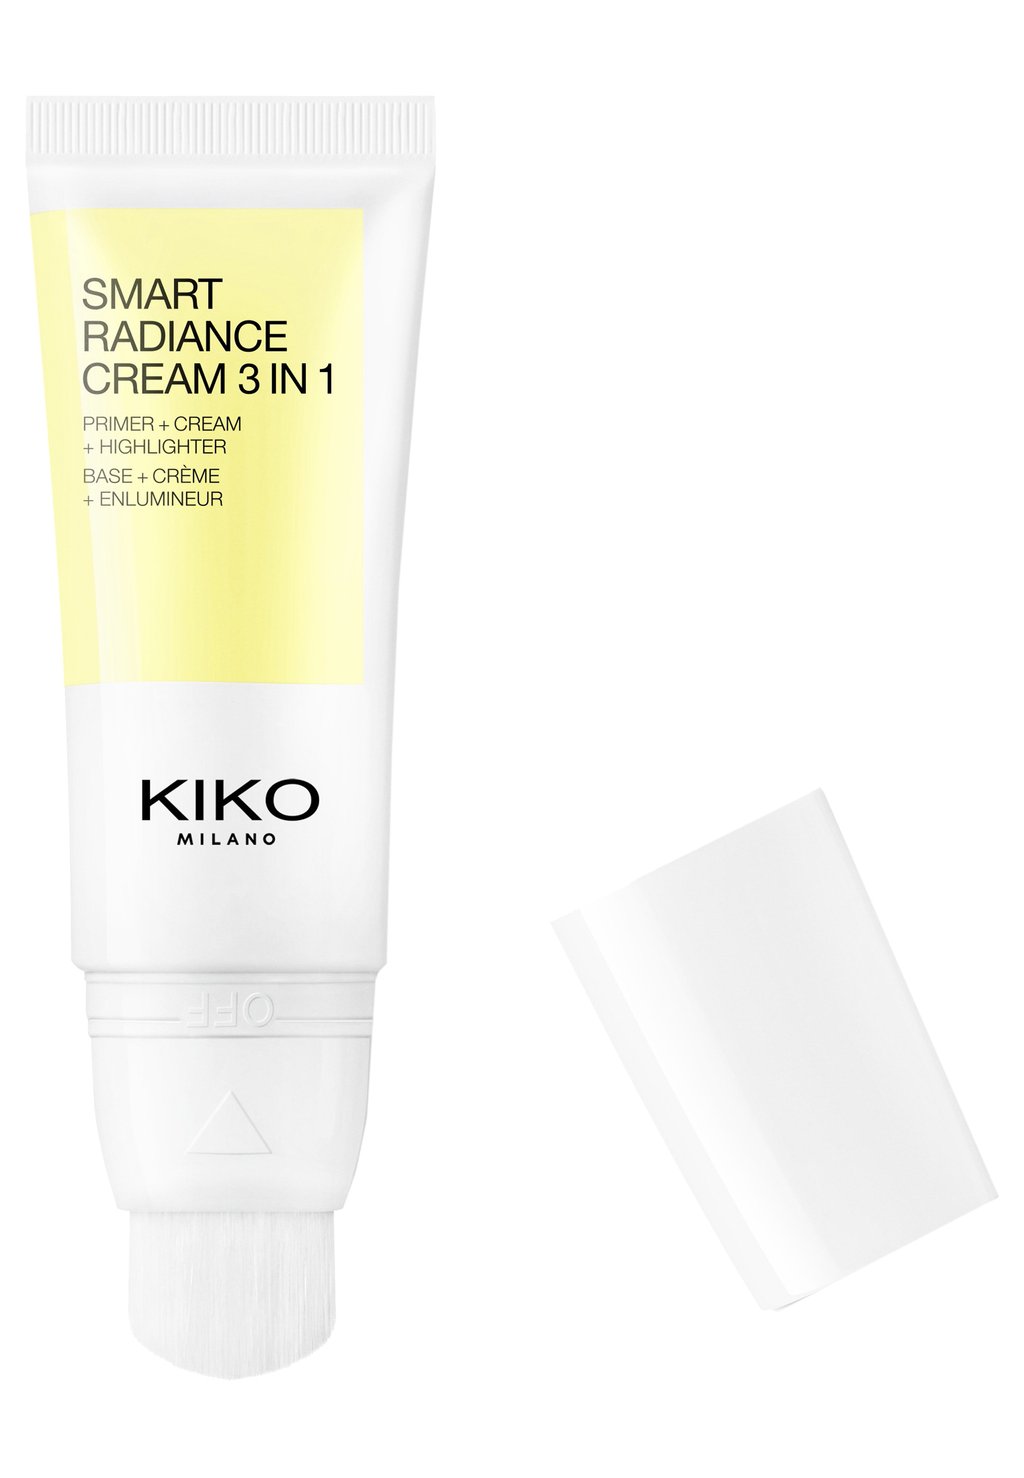 Праймер Smart Radiance Cream 3In1 KIKO Milano, цвет 02 radiant gold